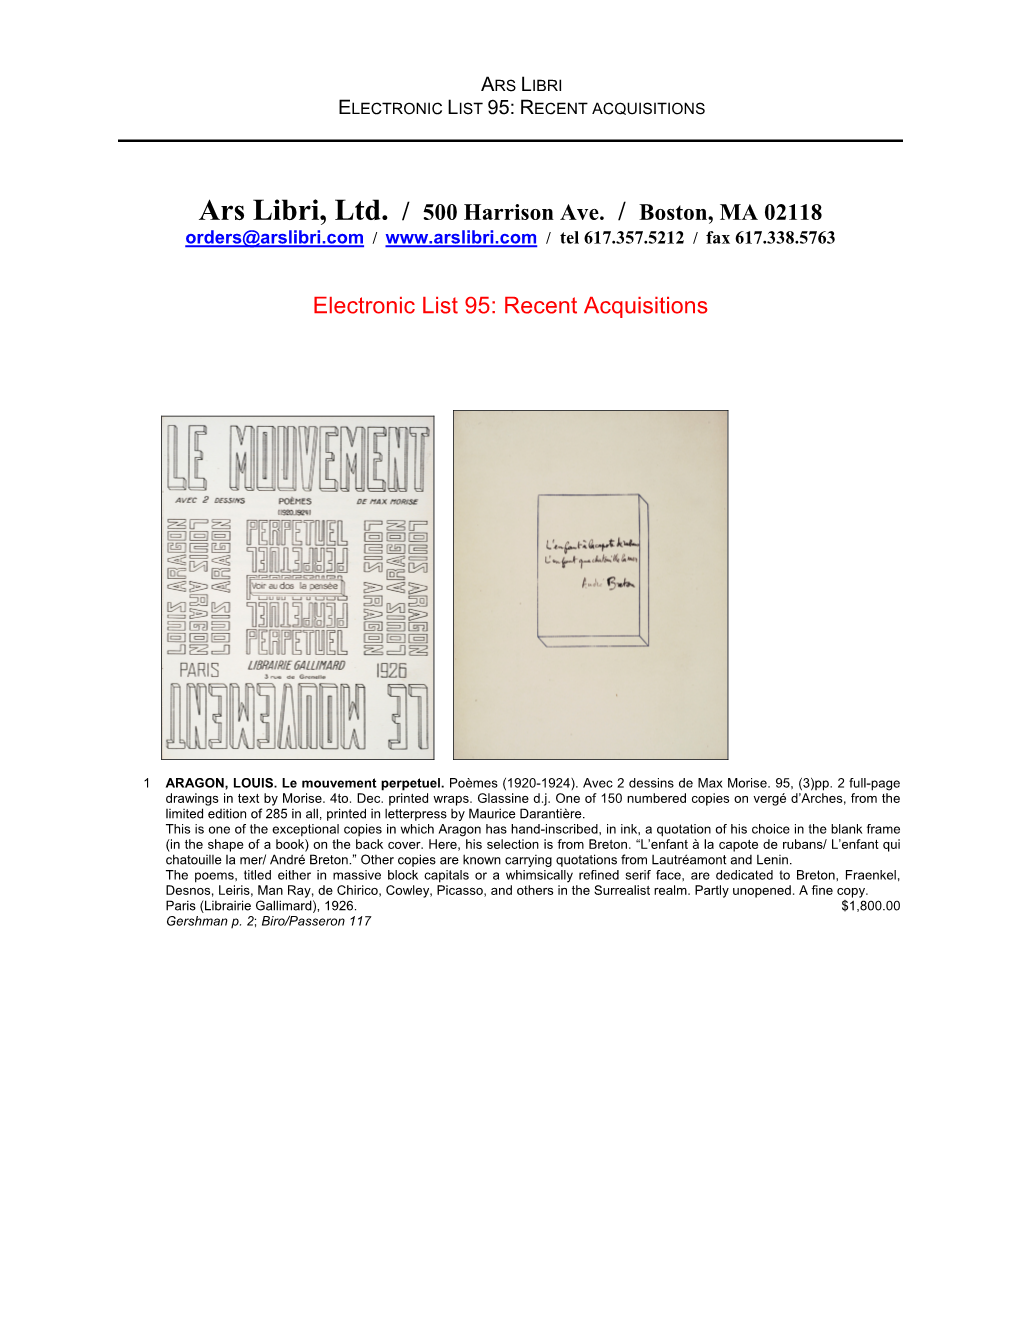 Ars Libri, Ltd. / 500 Harrison Ave. / Boston, MA 02118 Electronic List